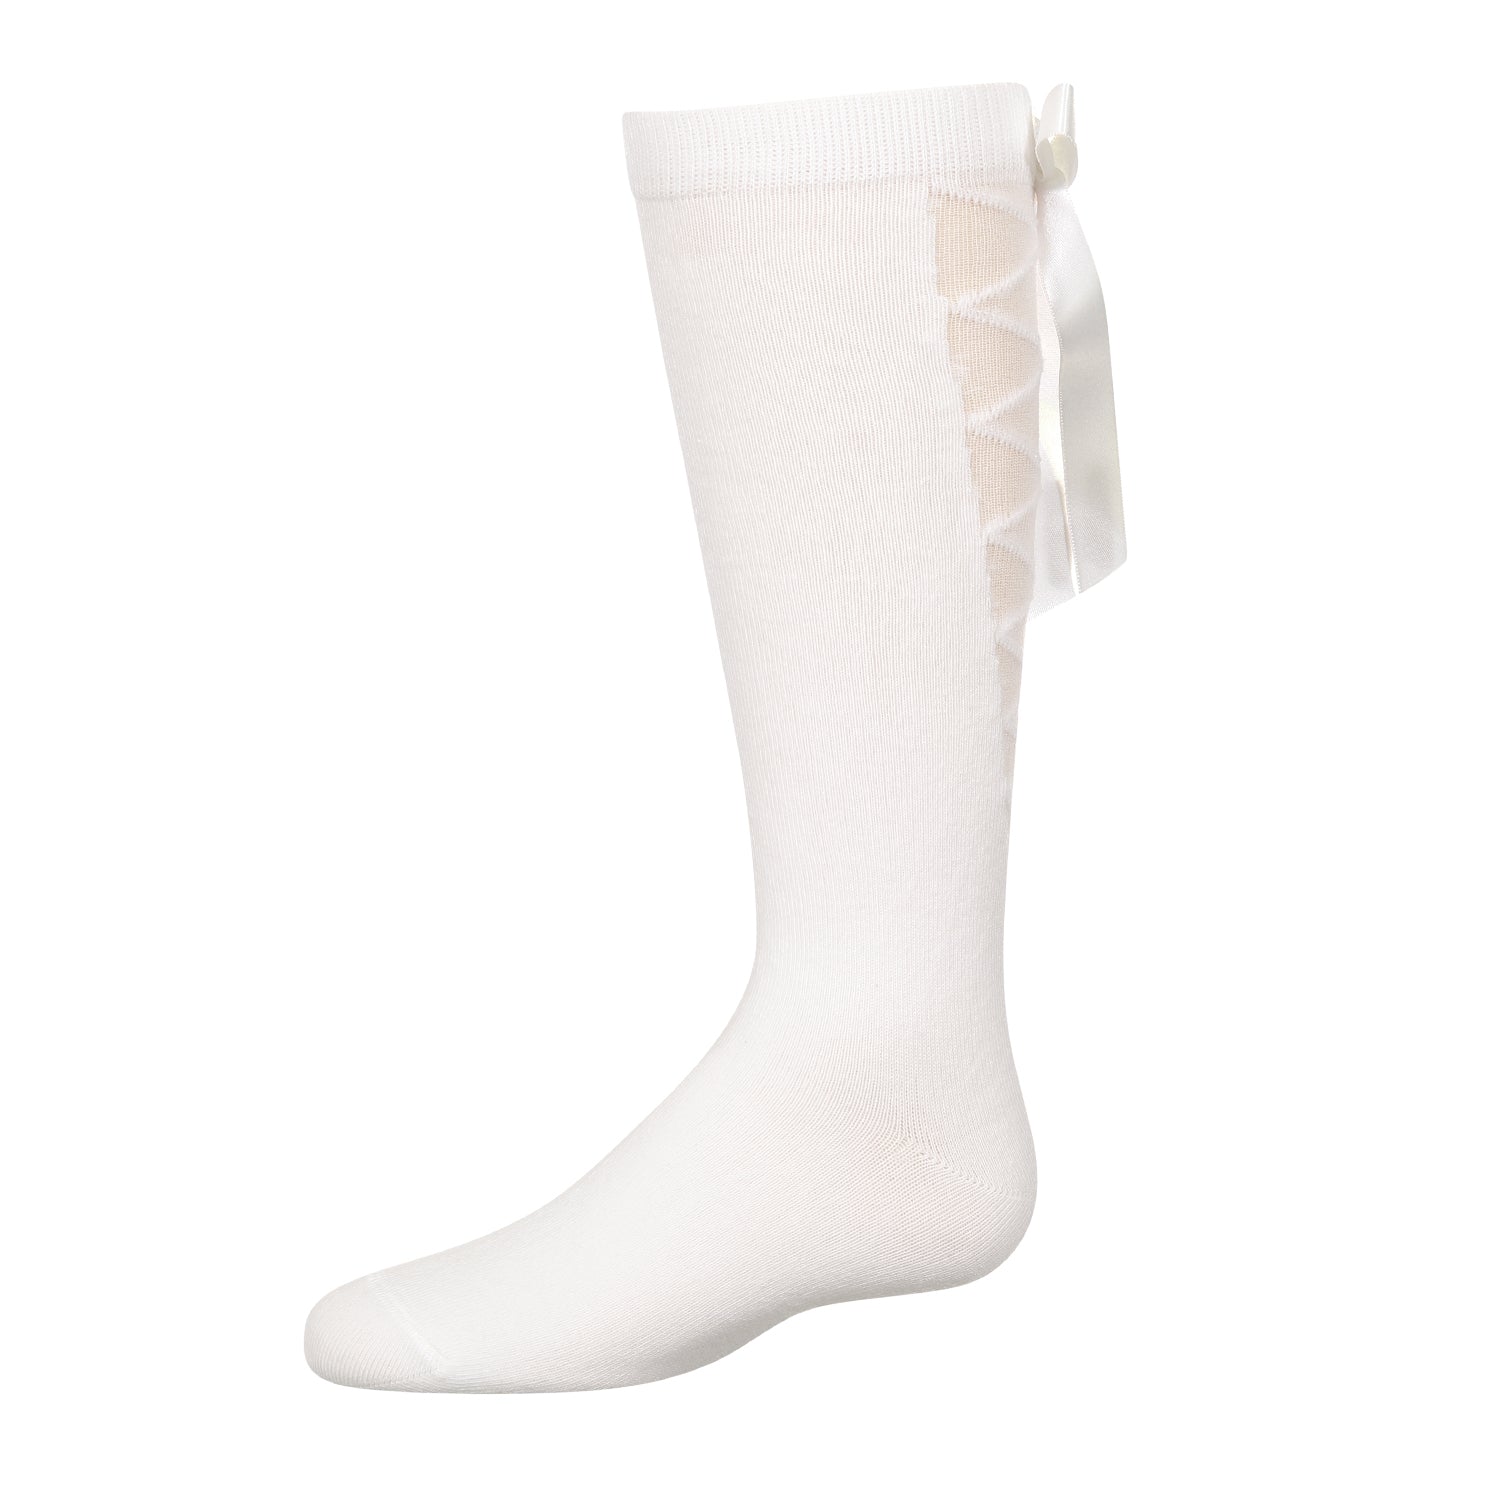 jrp socks ivory lace up knee high sock